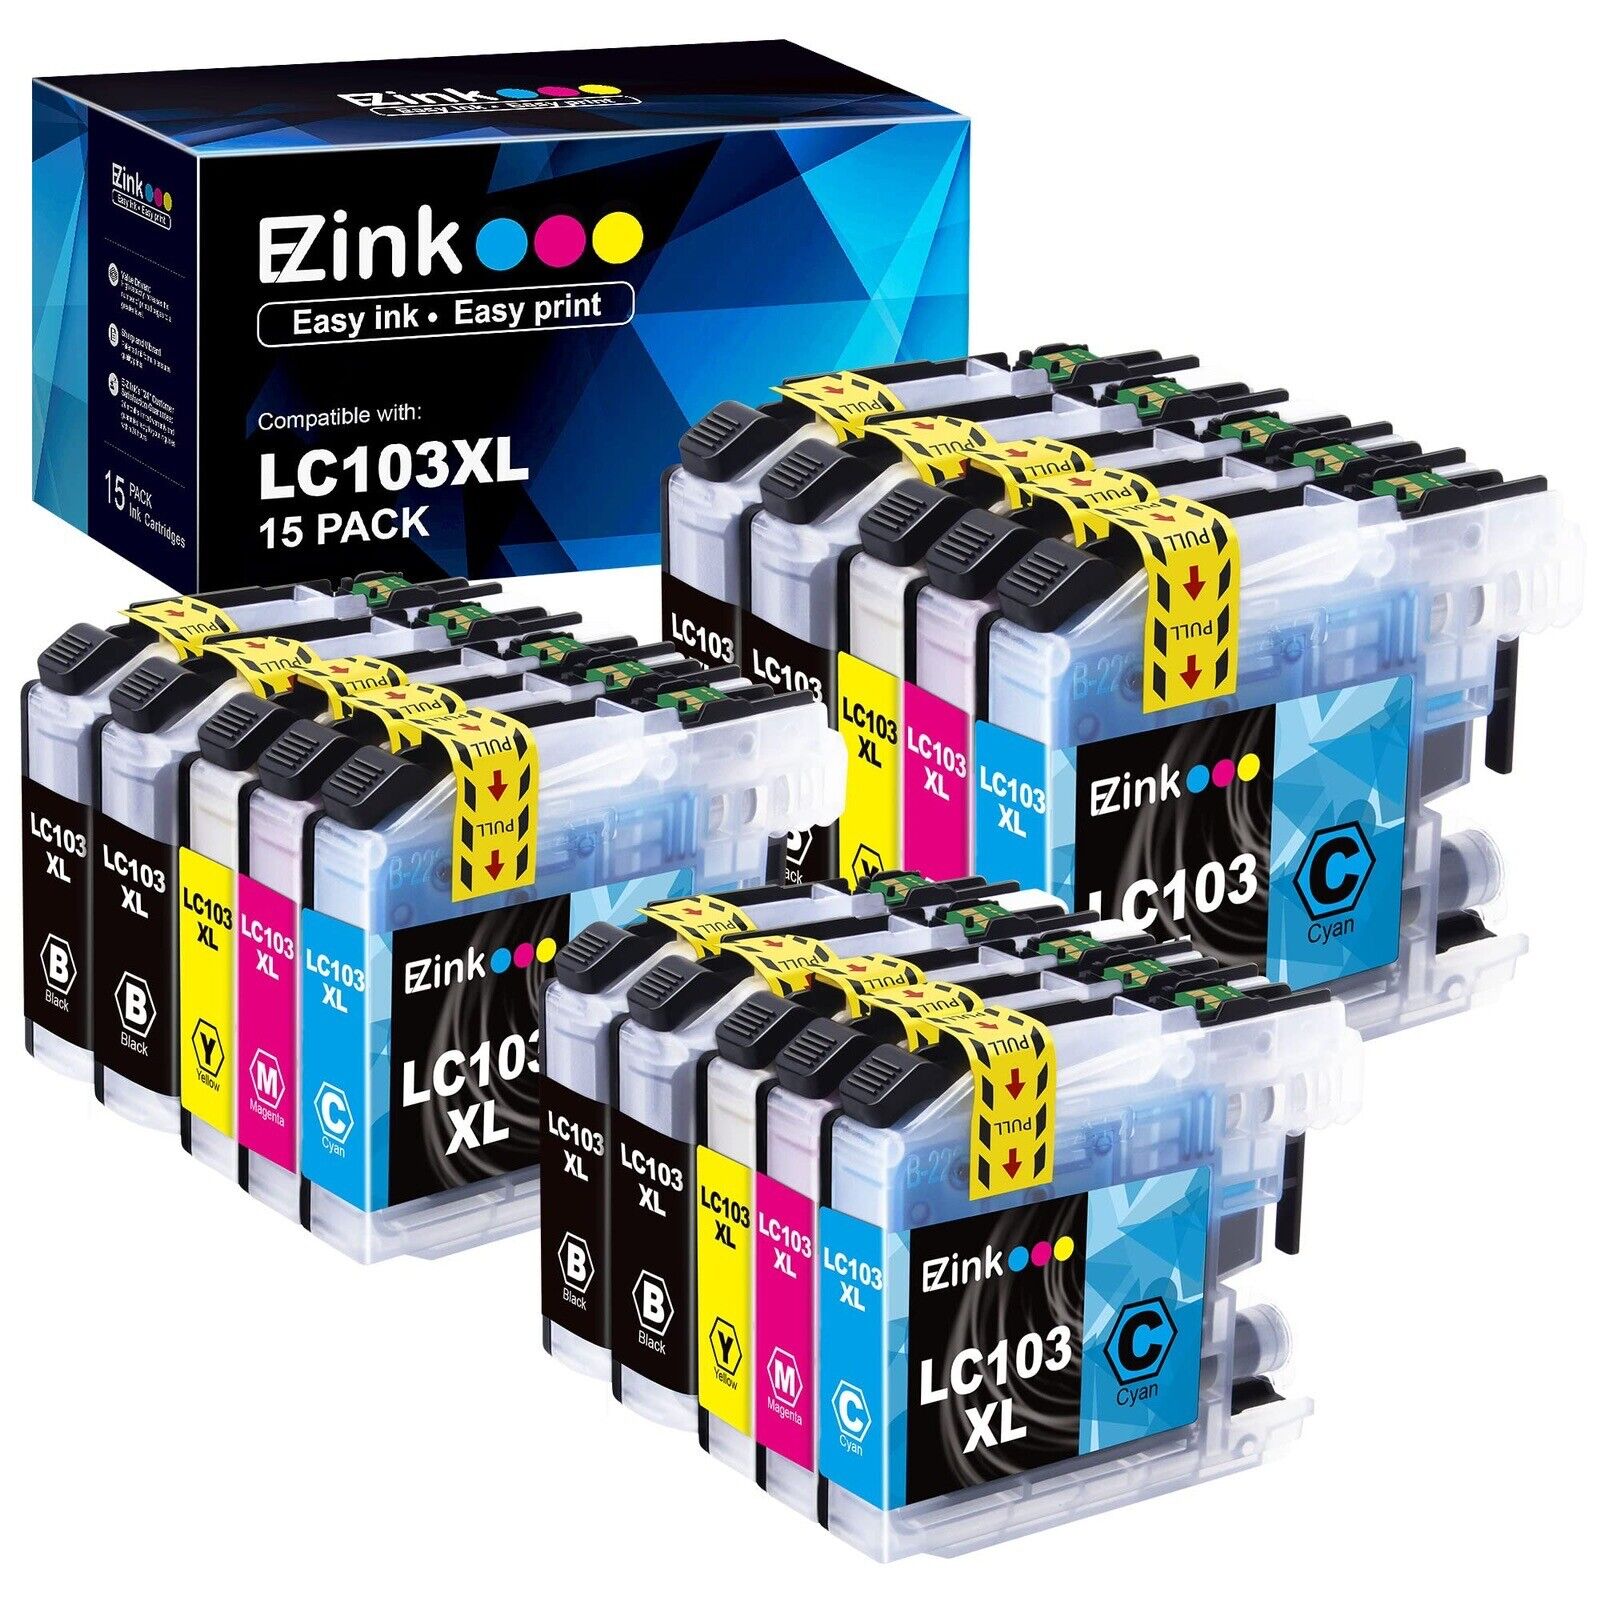 Ezink Ink Cartridges LC103 XL 15 Pack Brand New.